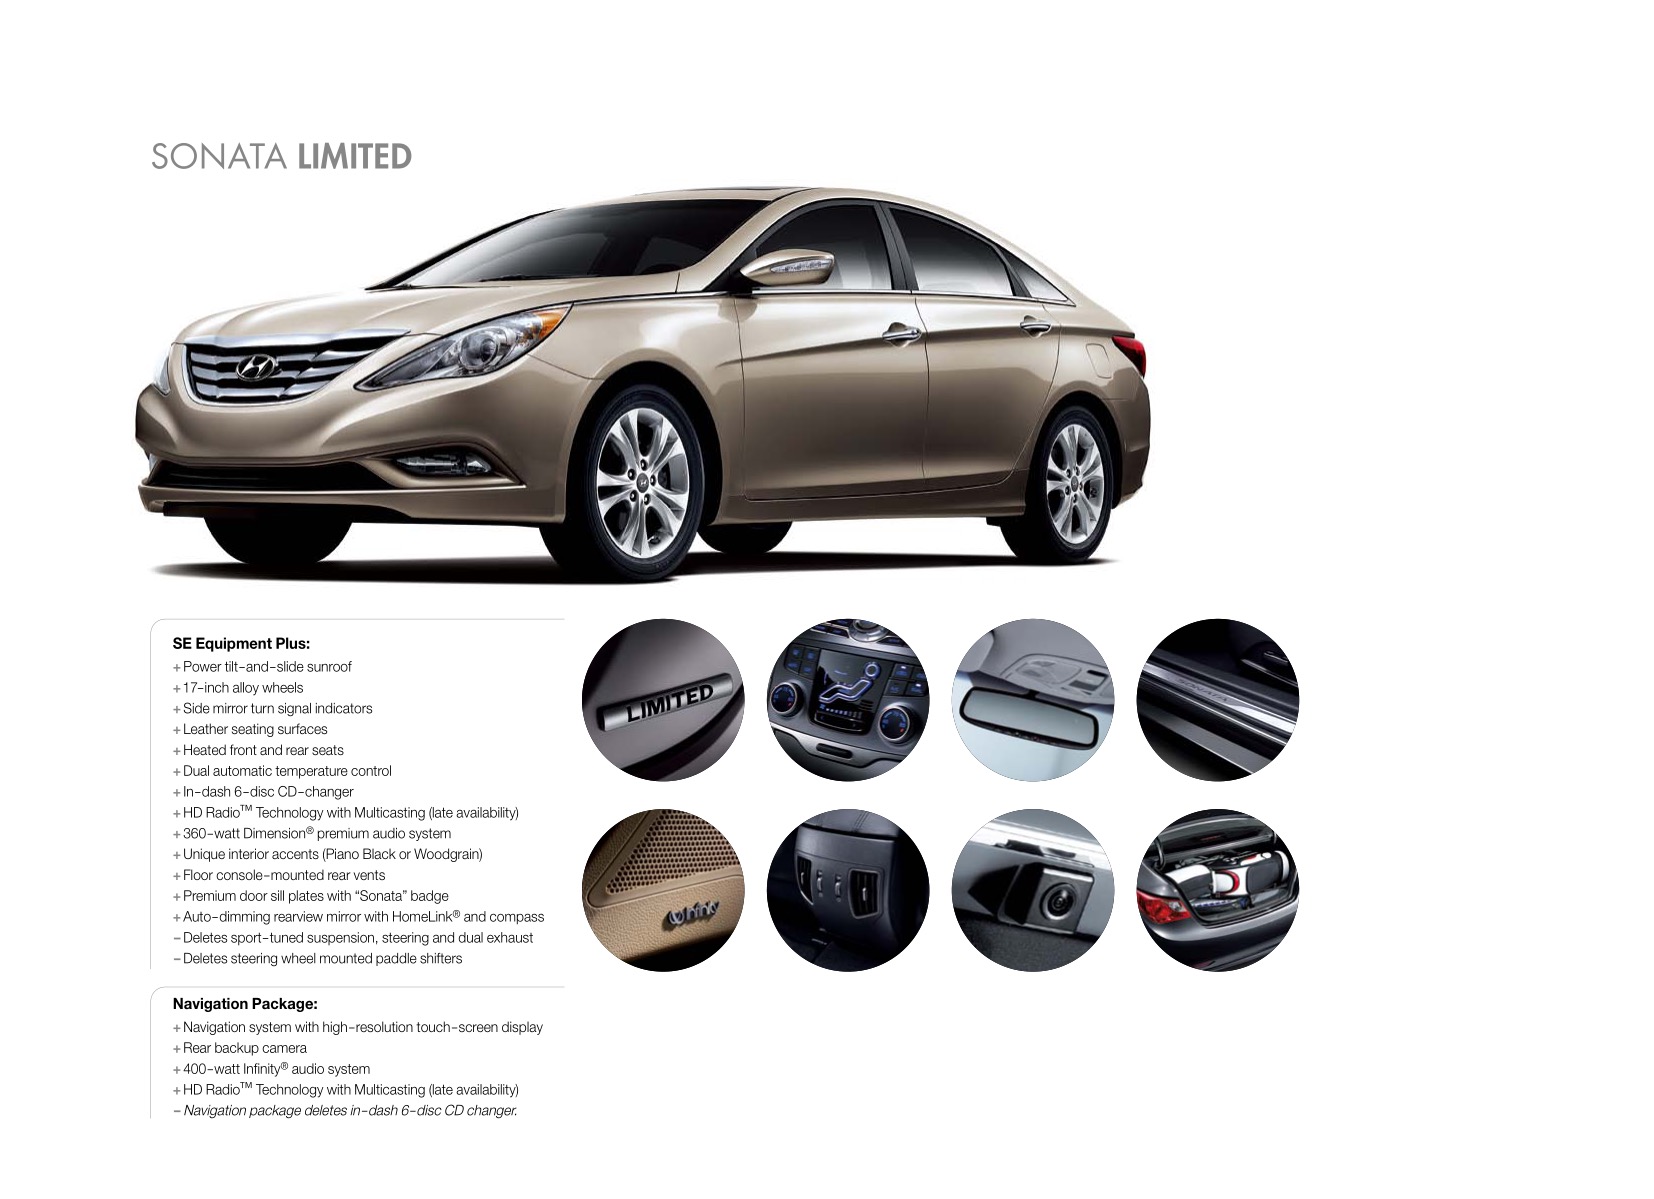 2011 Hyundai Sonata Brochure Page 10